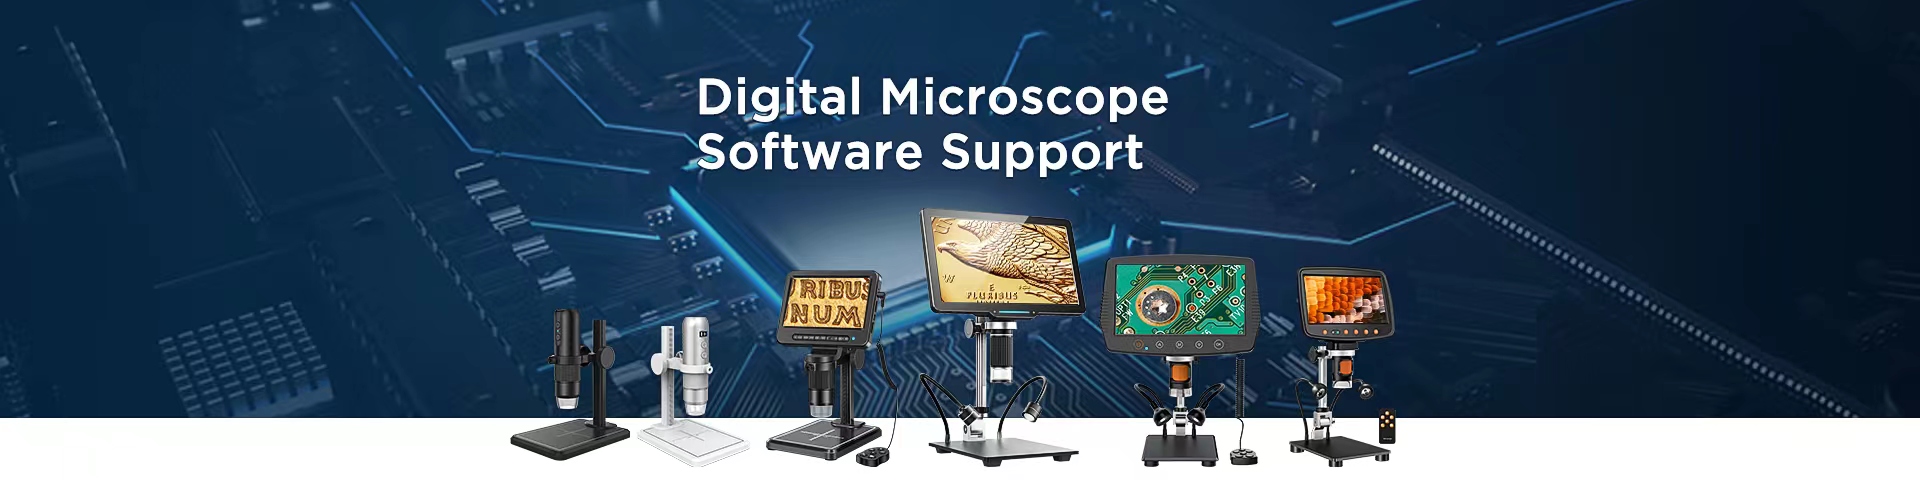 digital microscope dm4 software download